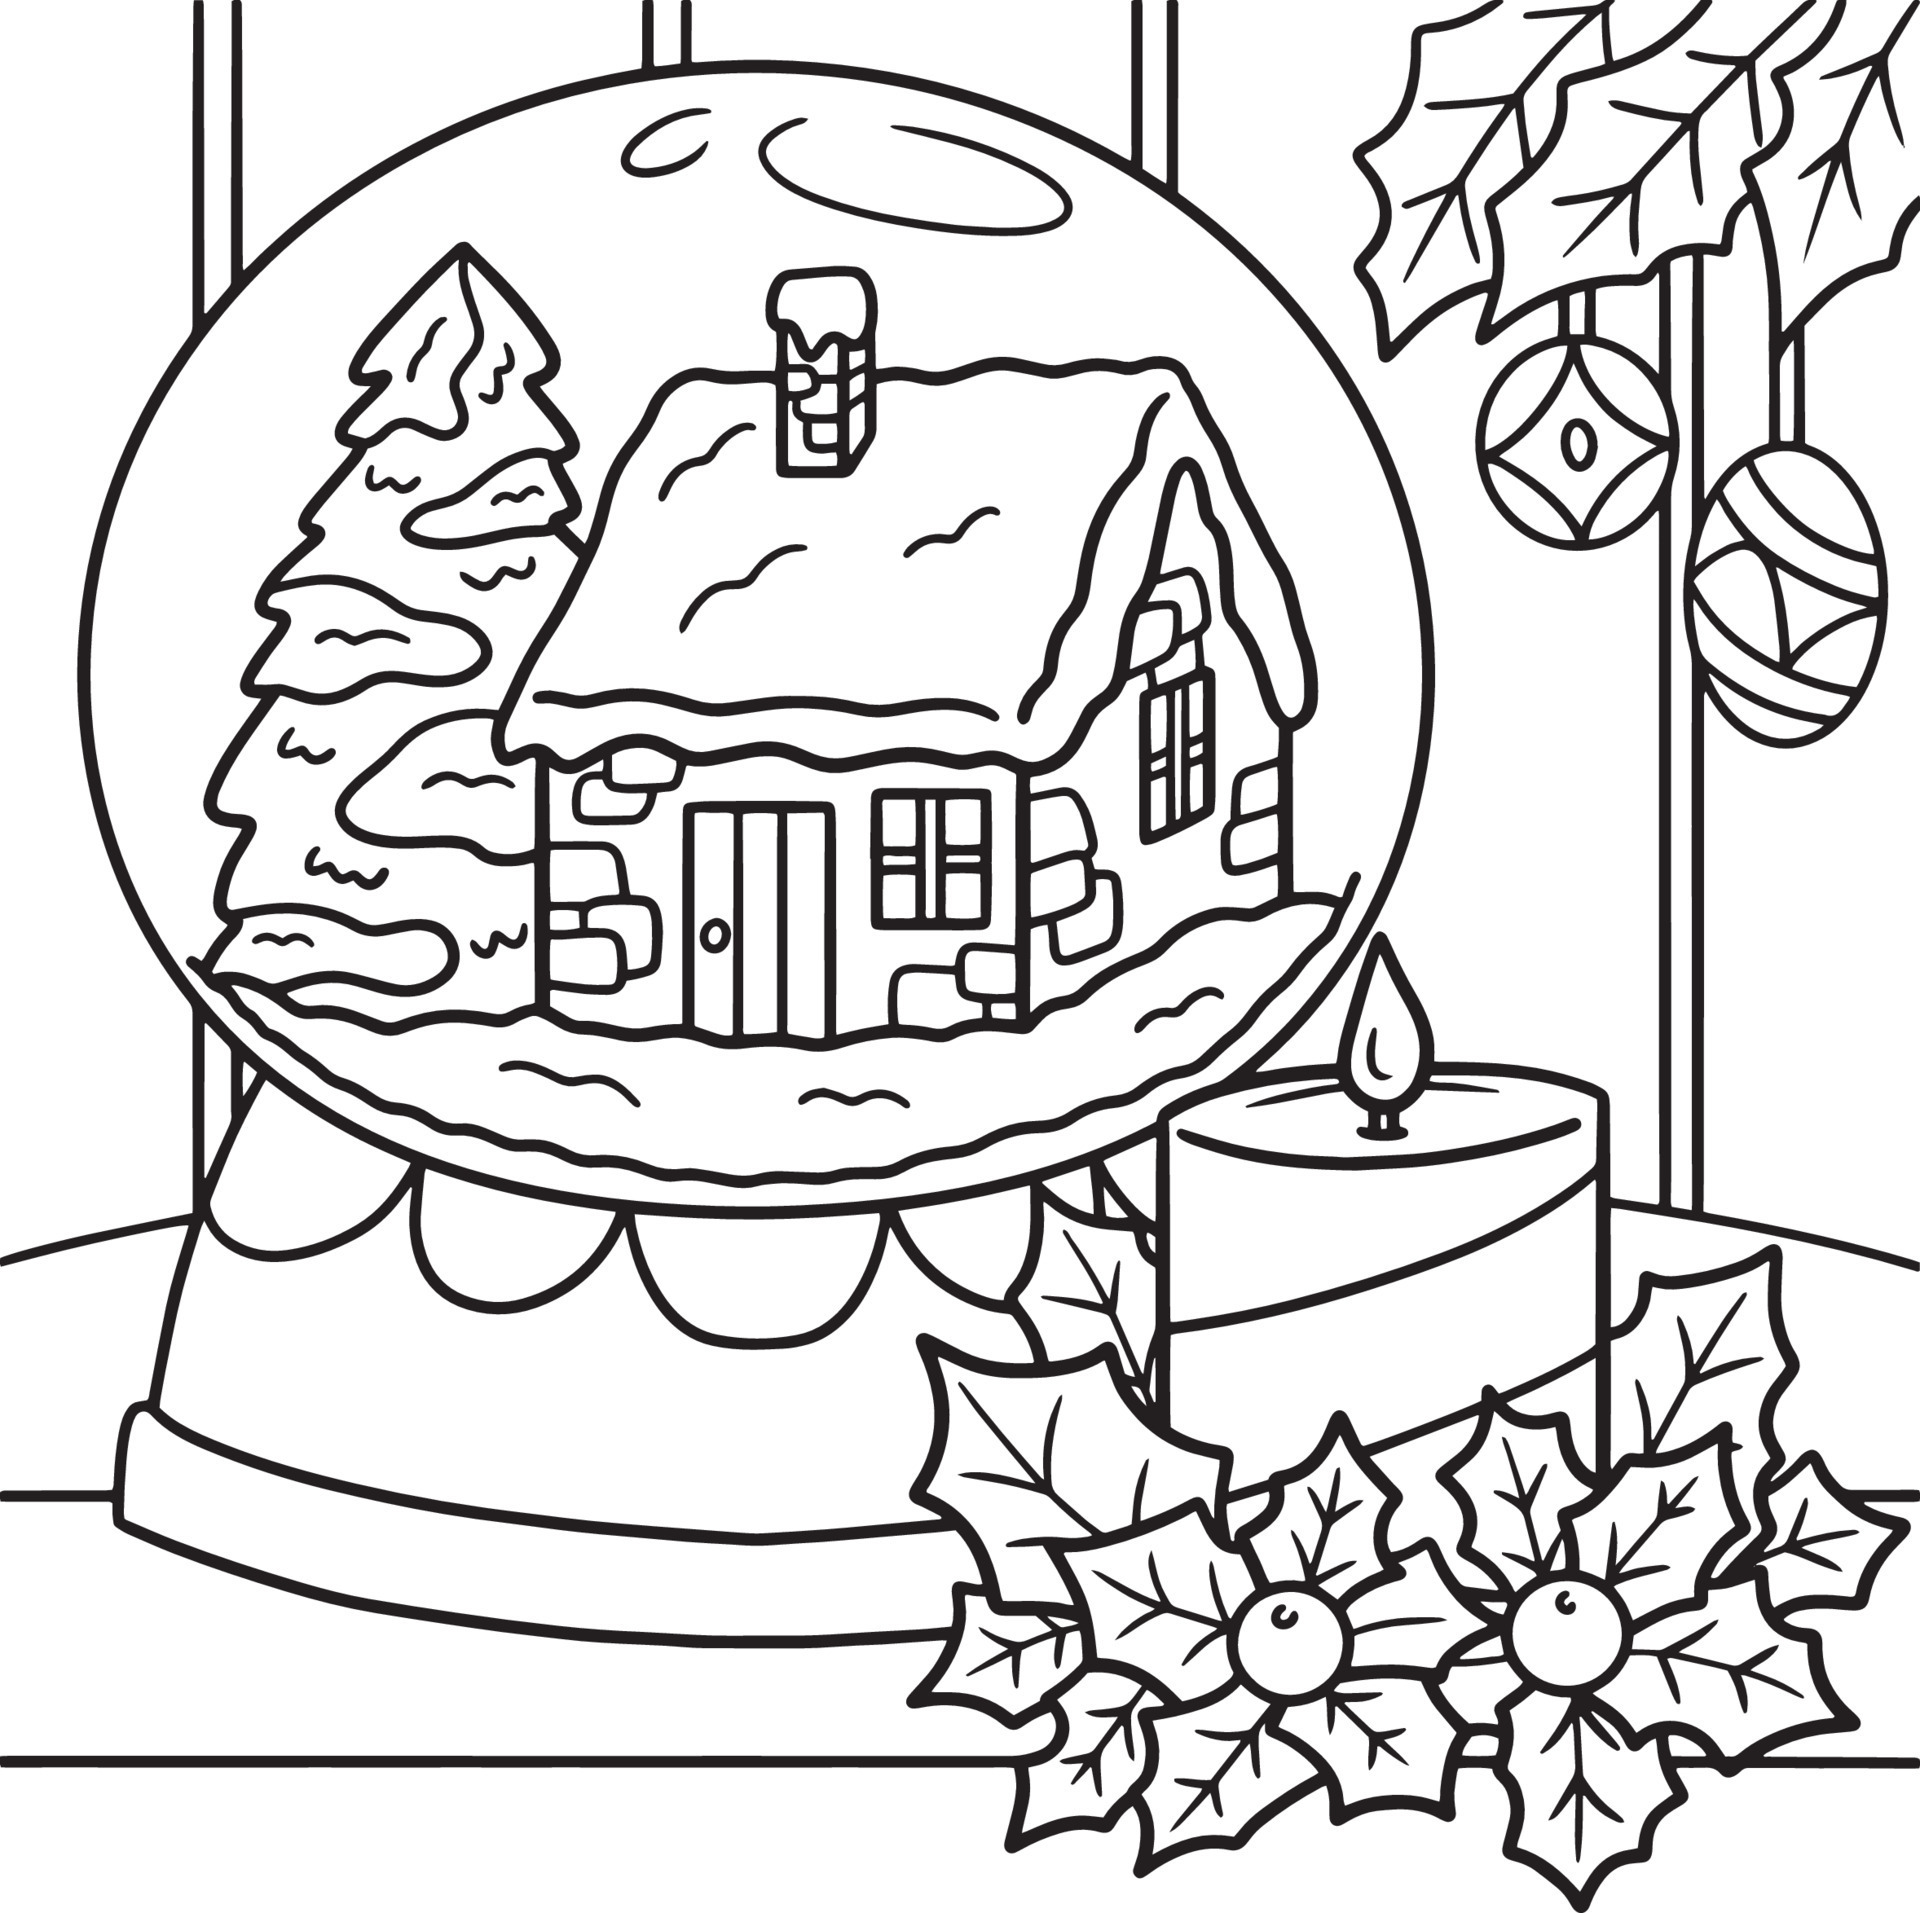 desenho de natal papai noel com saco para colorir 8823159 Vetor no Vecteezy